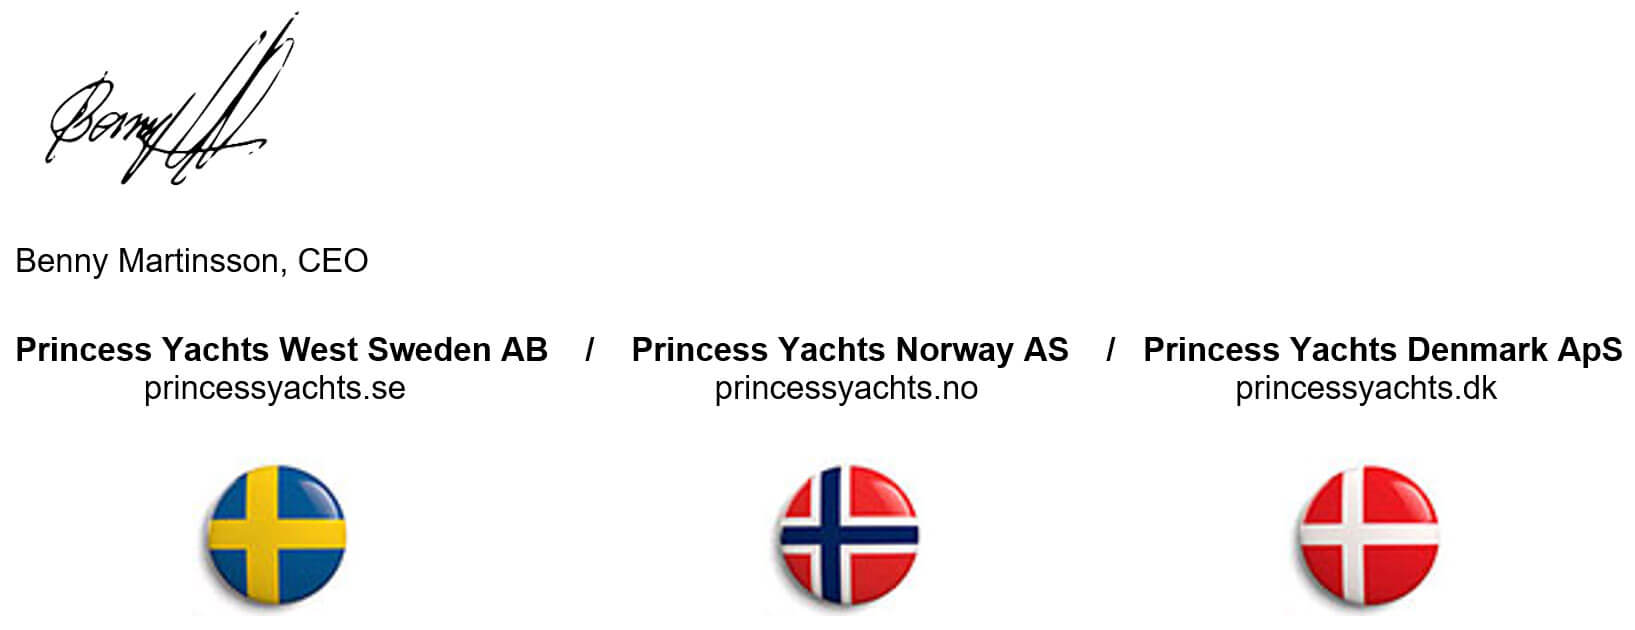 princess yachts denmark